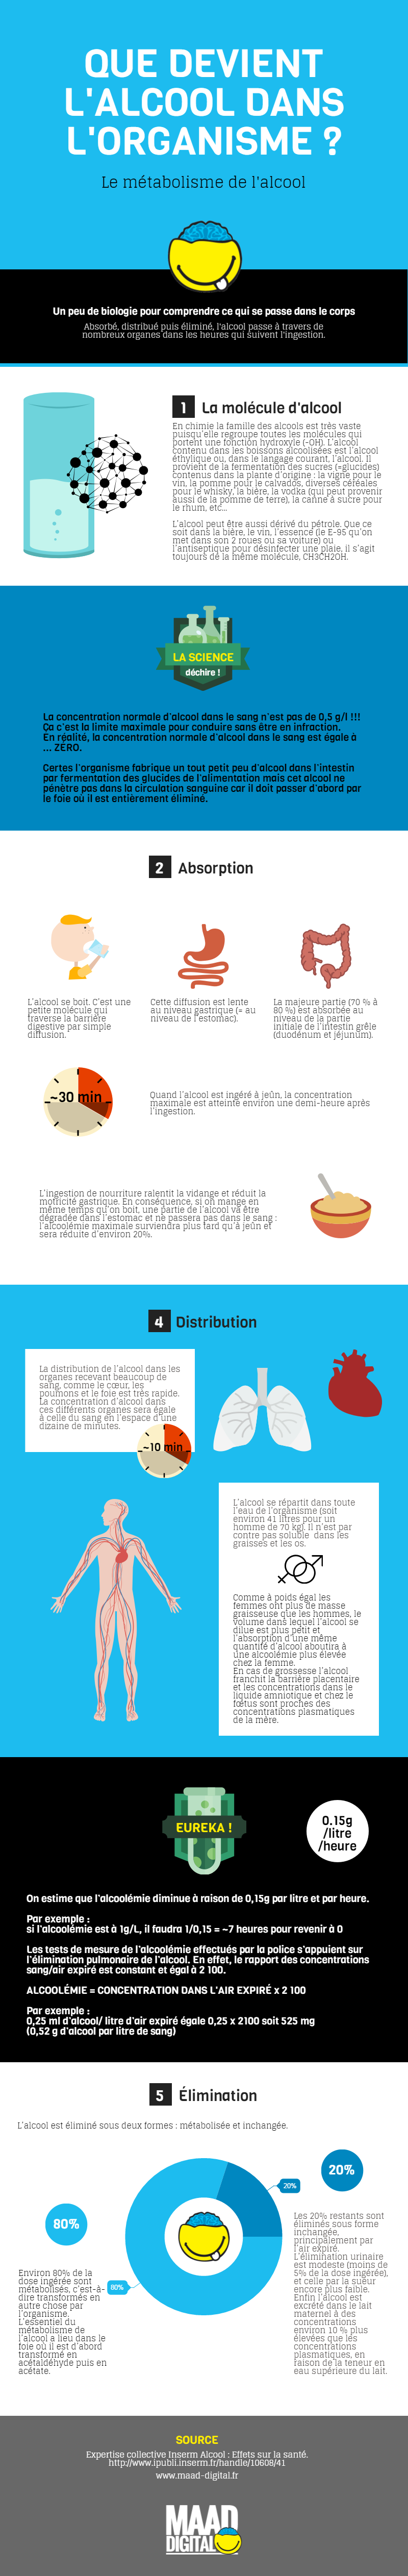 Infographie : métabolisme de l'alcool - MAAD Digital